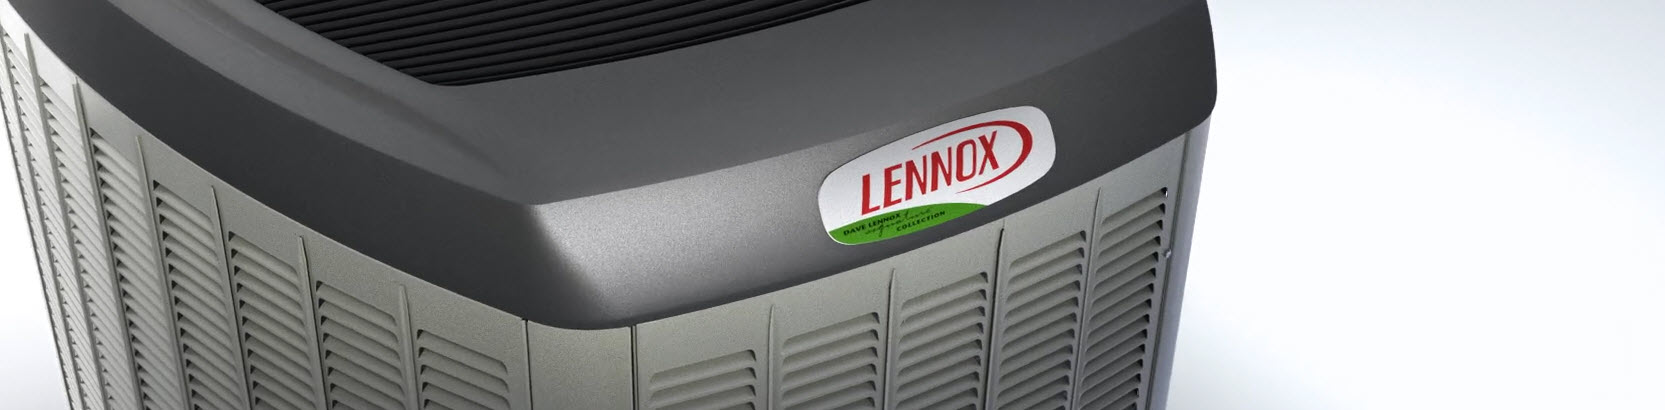 Lennox AC replacement, ac installation ogden